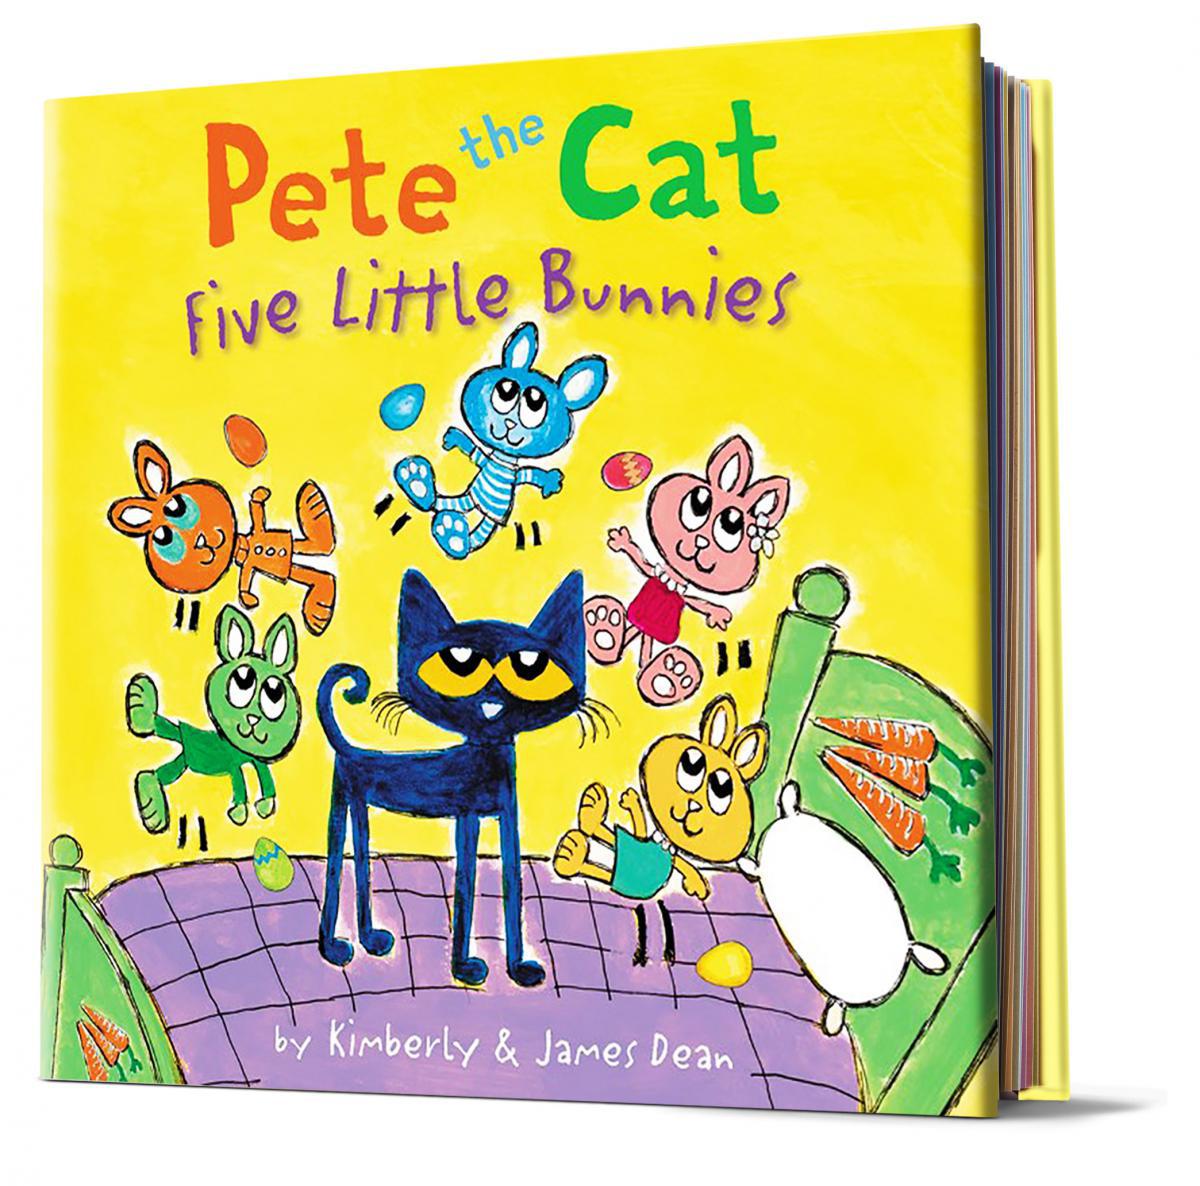  Pete the Cat: Five Little Bunnies 